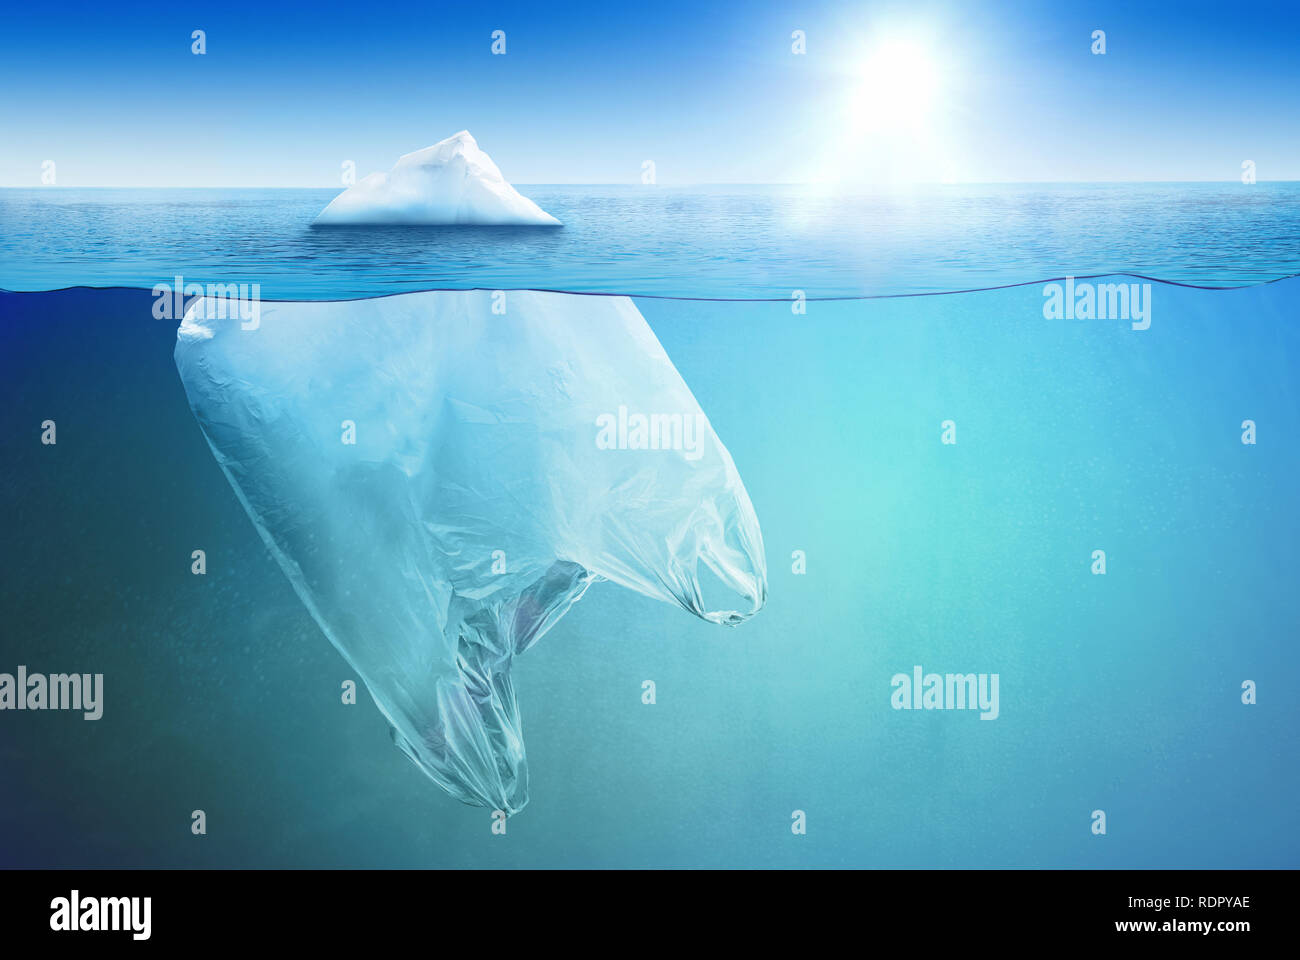 Huge vinyl bag floating in the open sea as an iceberg Stock Photo